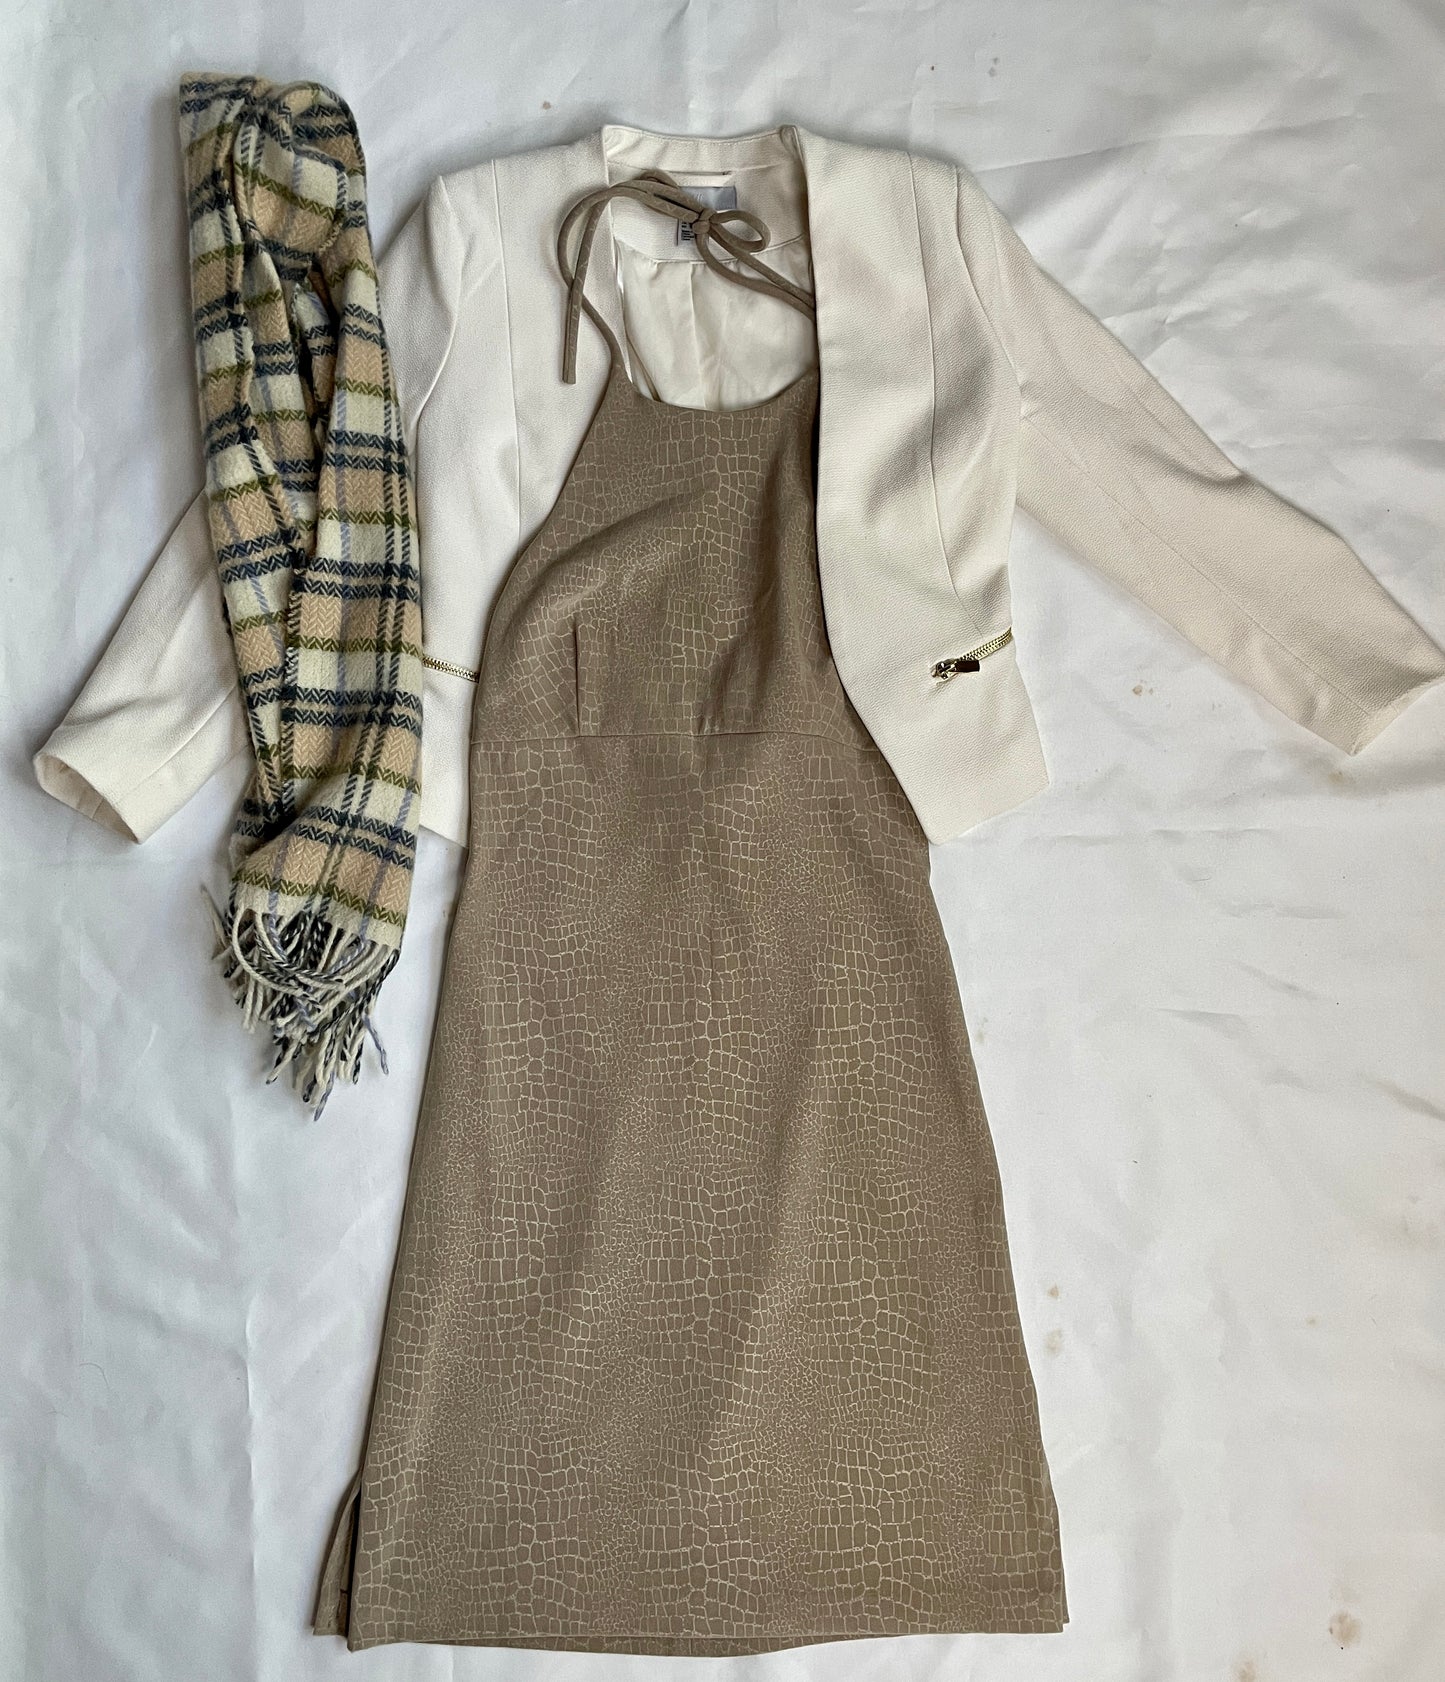 FALL inspired outfit bundle - dress + blazer + scarf